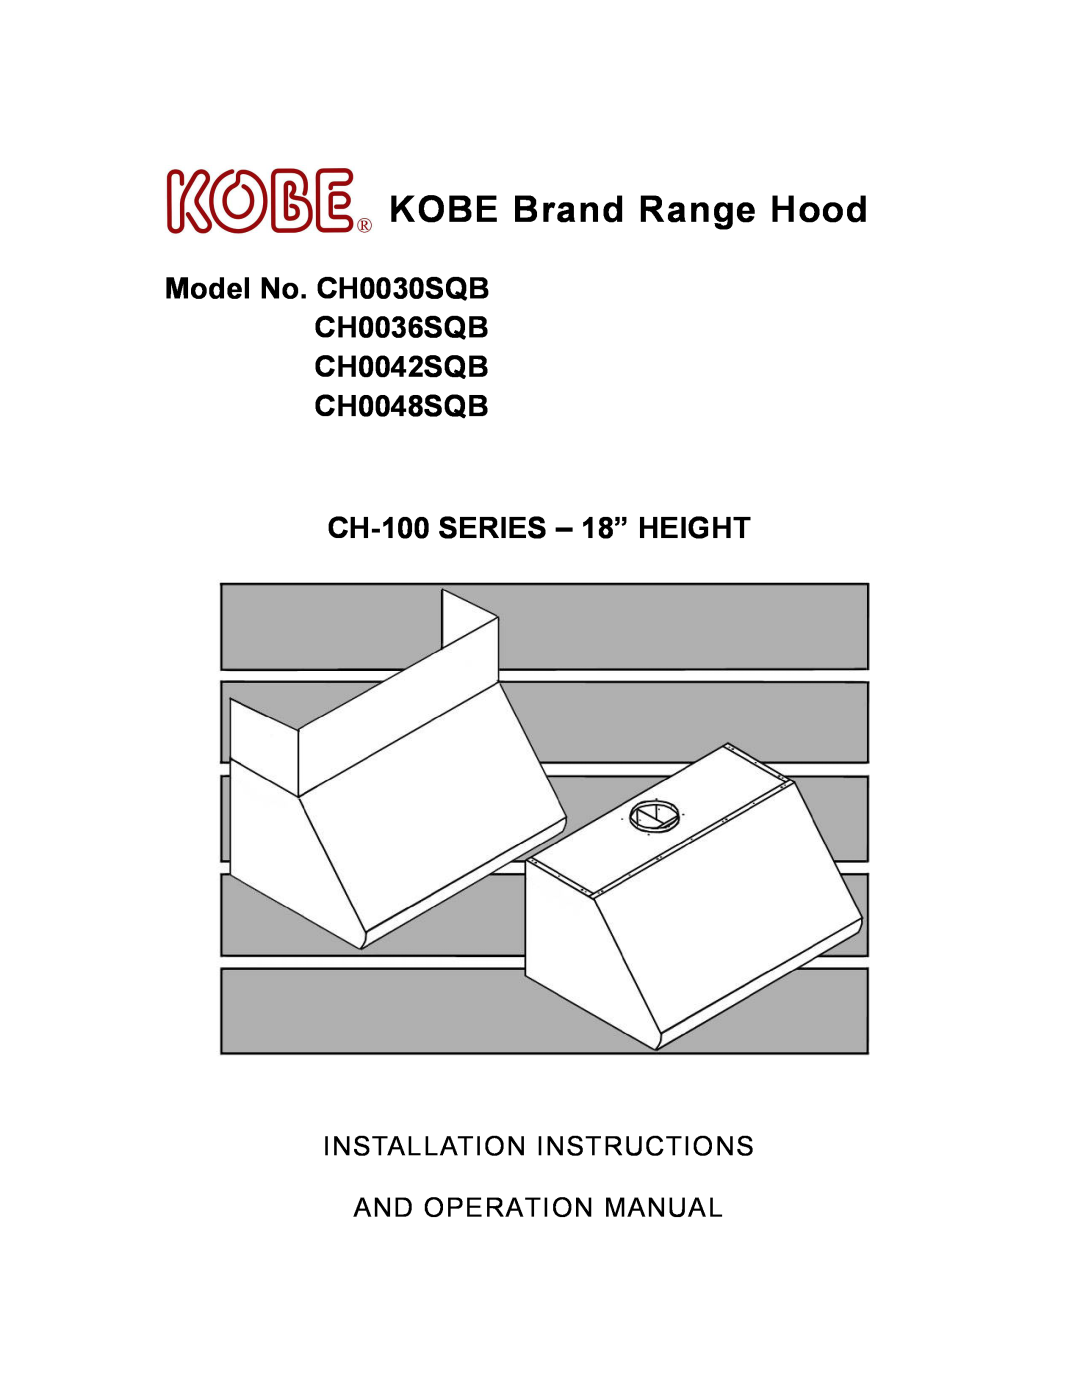 Kobe Range Hoods manual KOBE Brand Range Hood, Model No. CH0030SQB CH0036SQB CH0042SQB CH0048SQB 